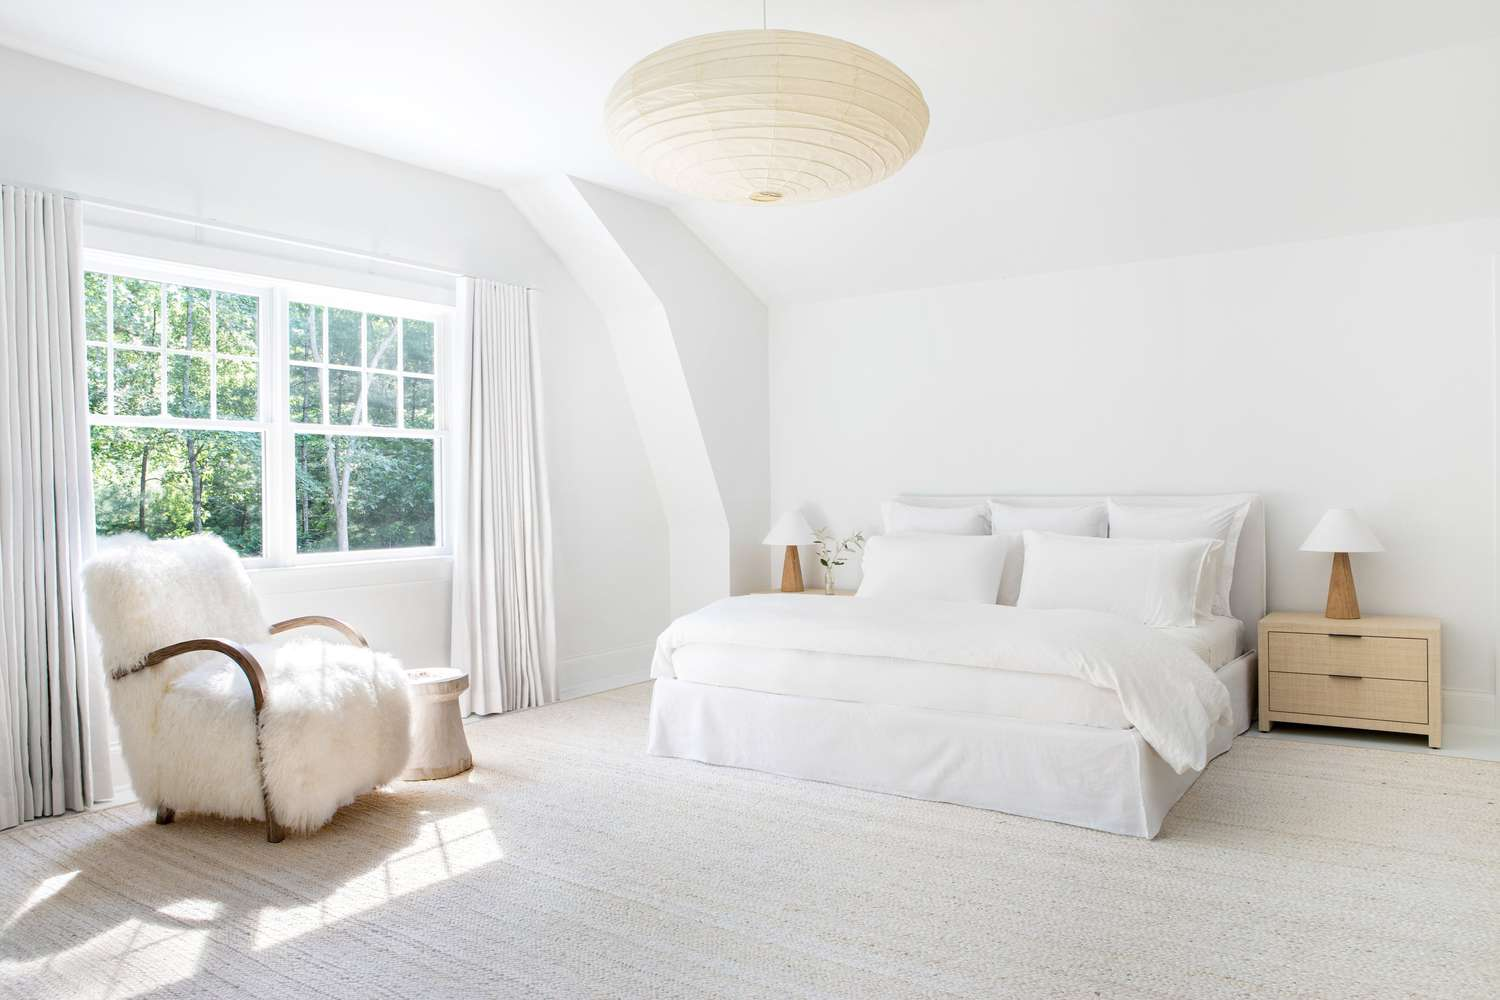 All-white modern minimalist bedroom